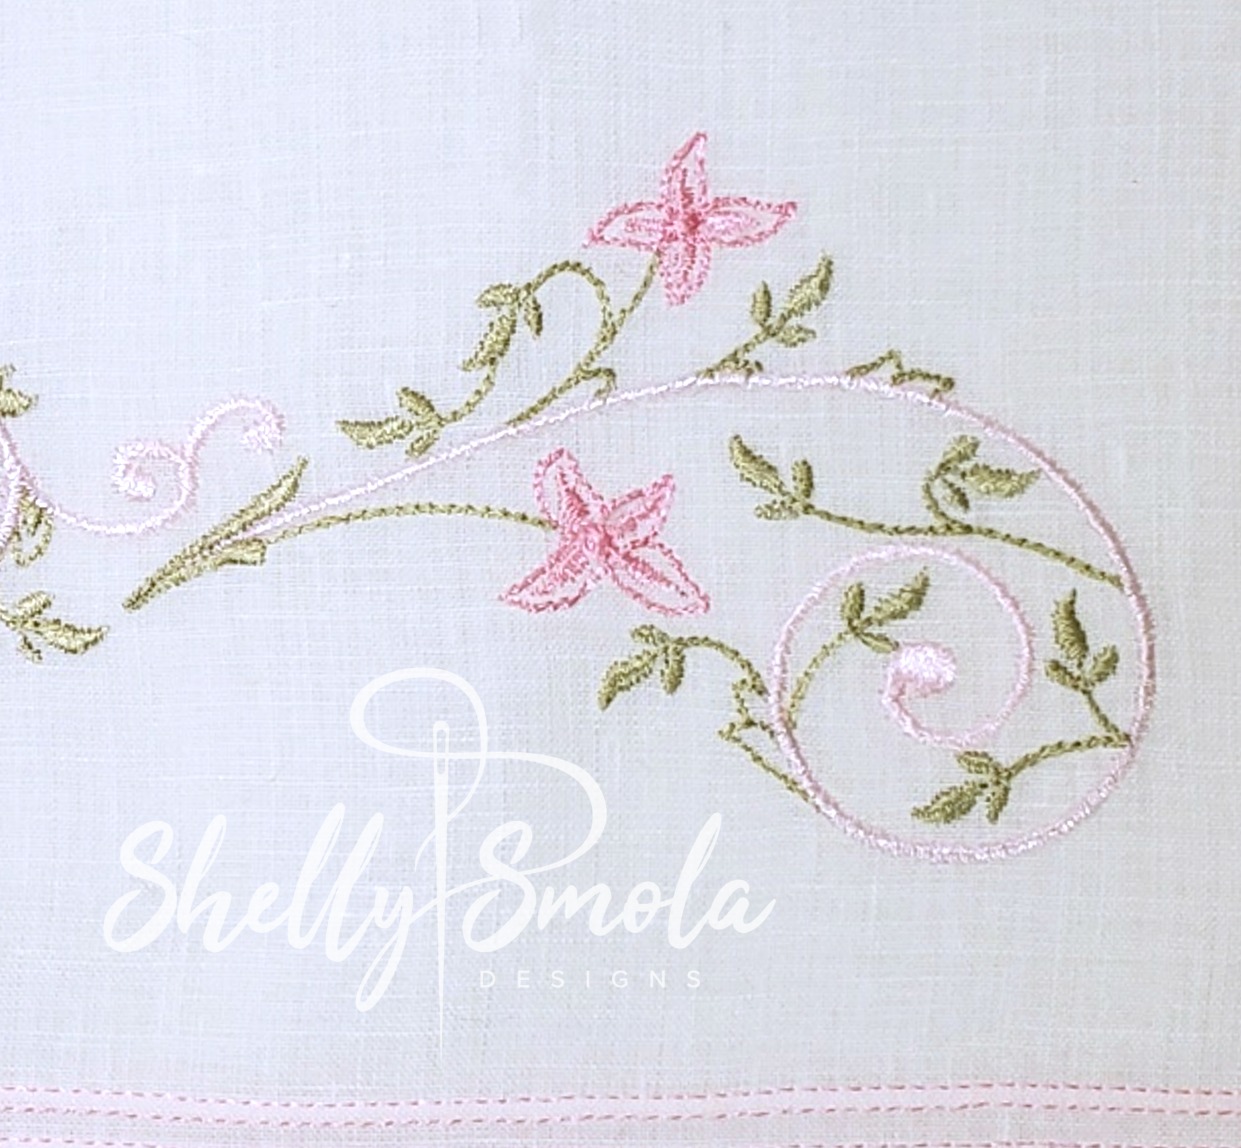 Victorian Trellis Companion by Shelly Smola